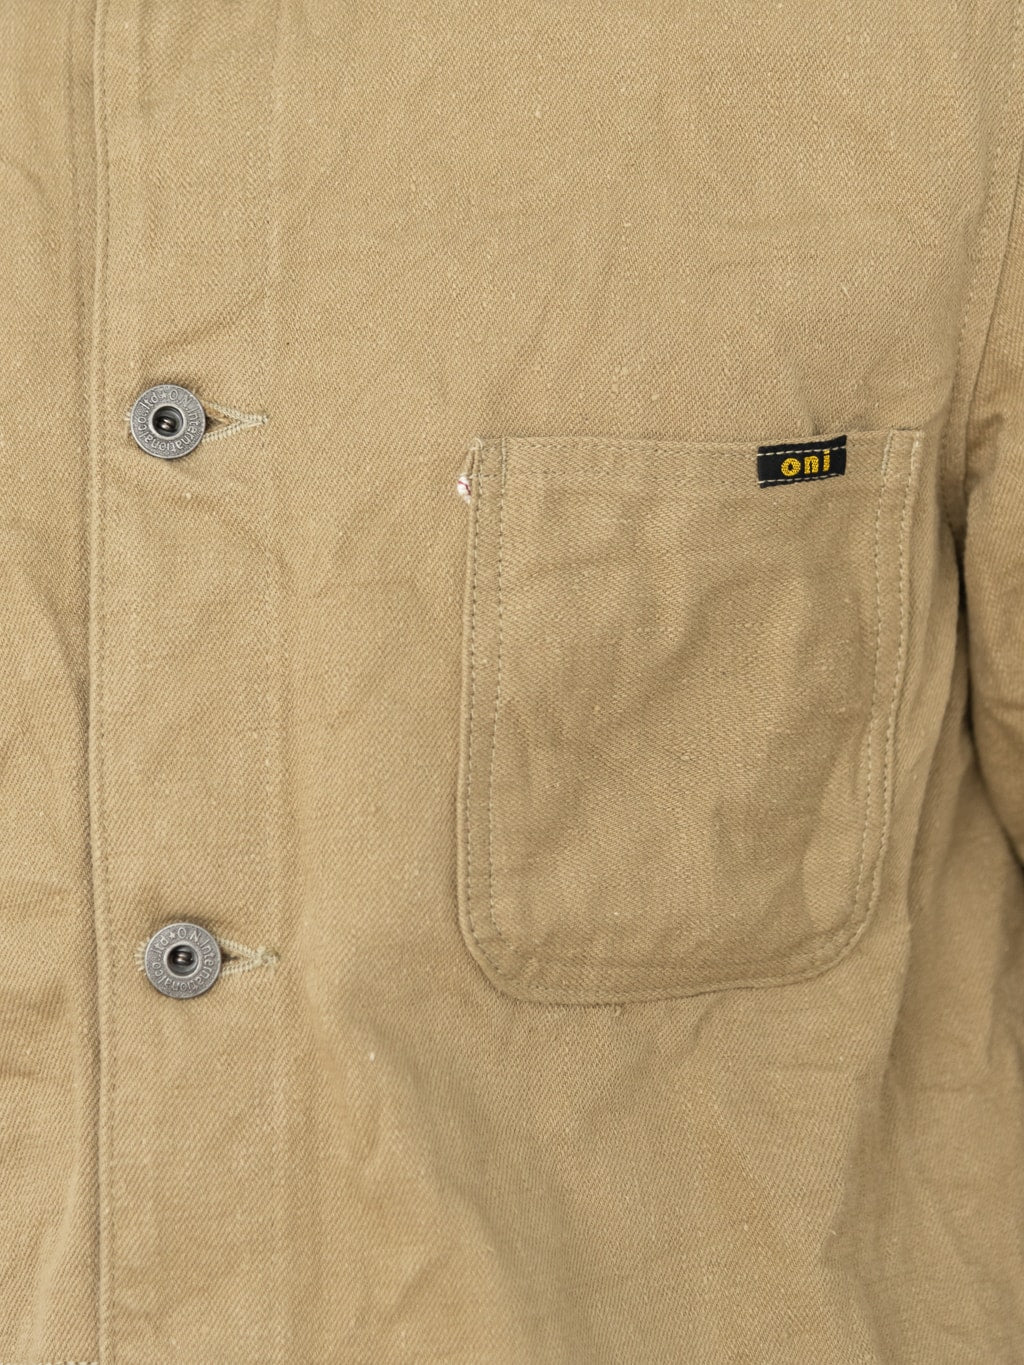 ONI Denim 03501 Sulfur Coverall Jacket Khaki Beige chest pocket